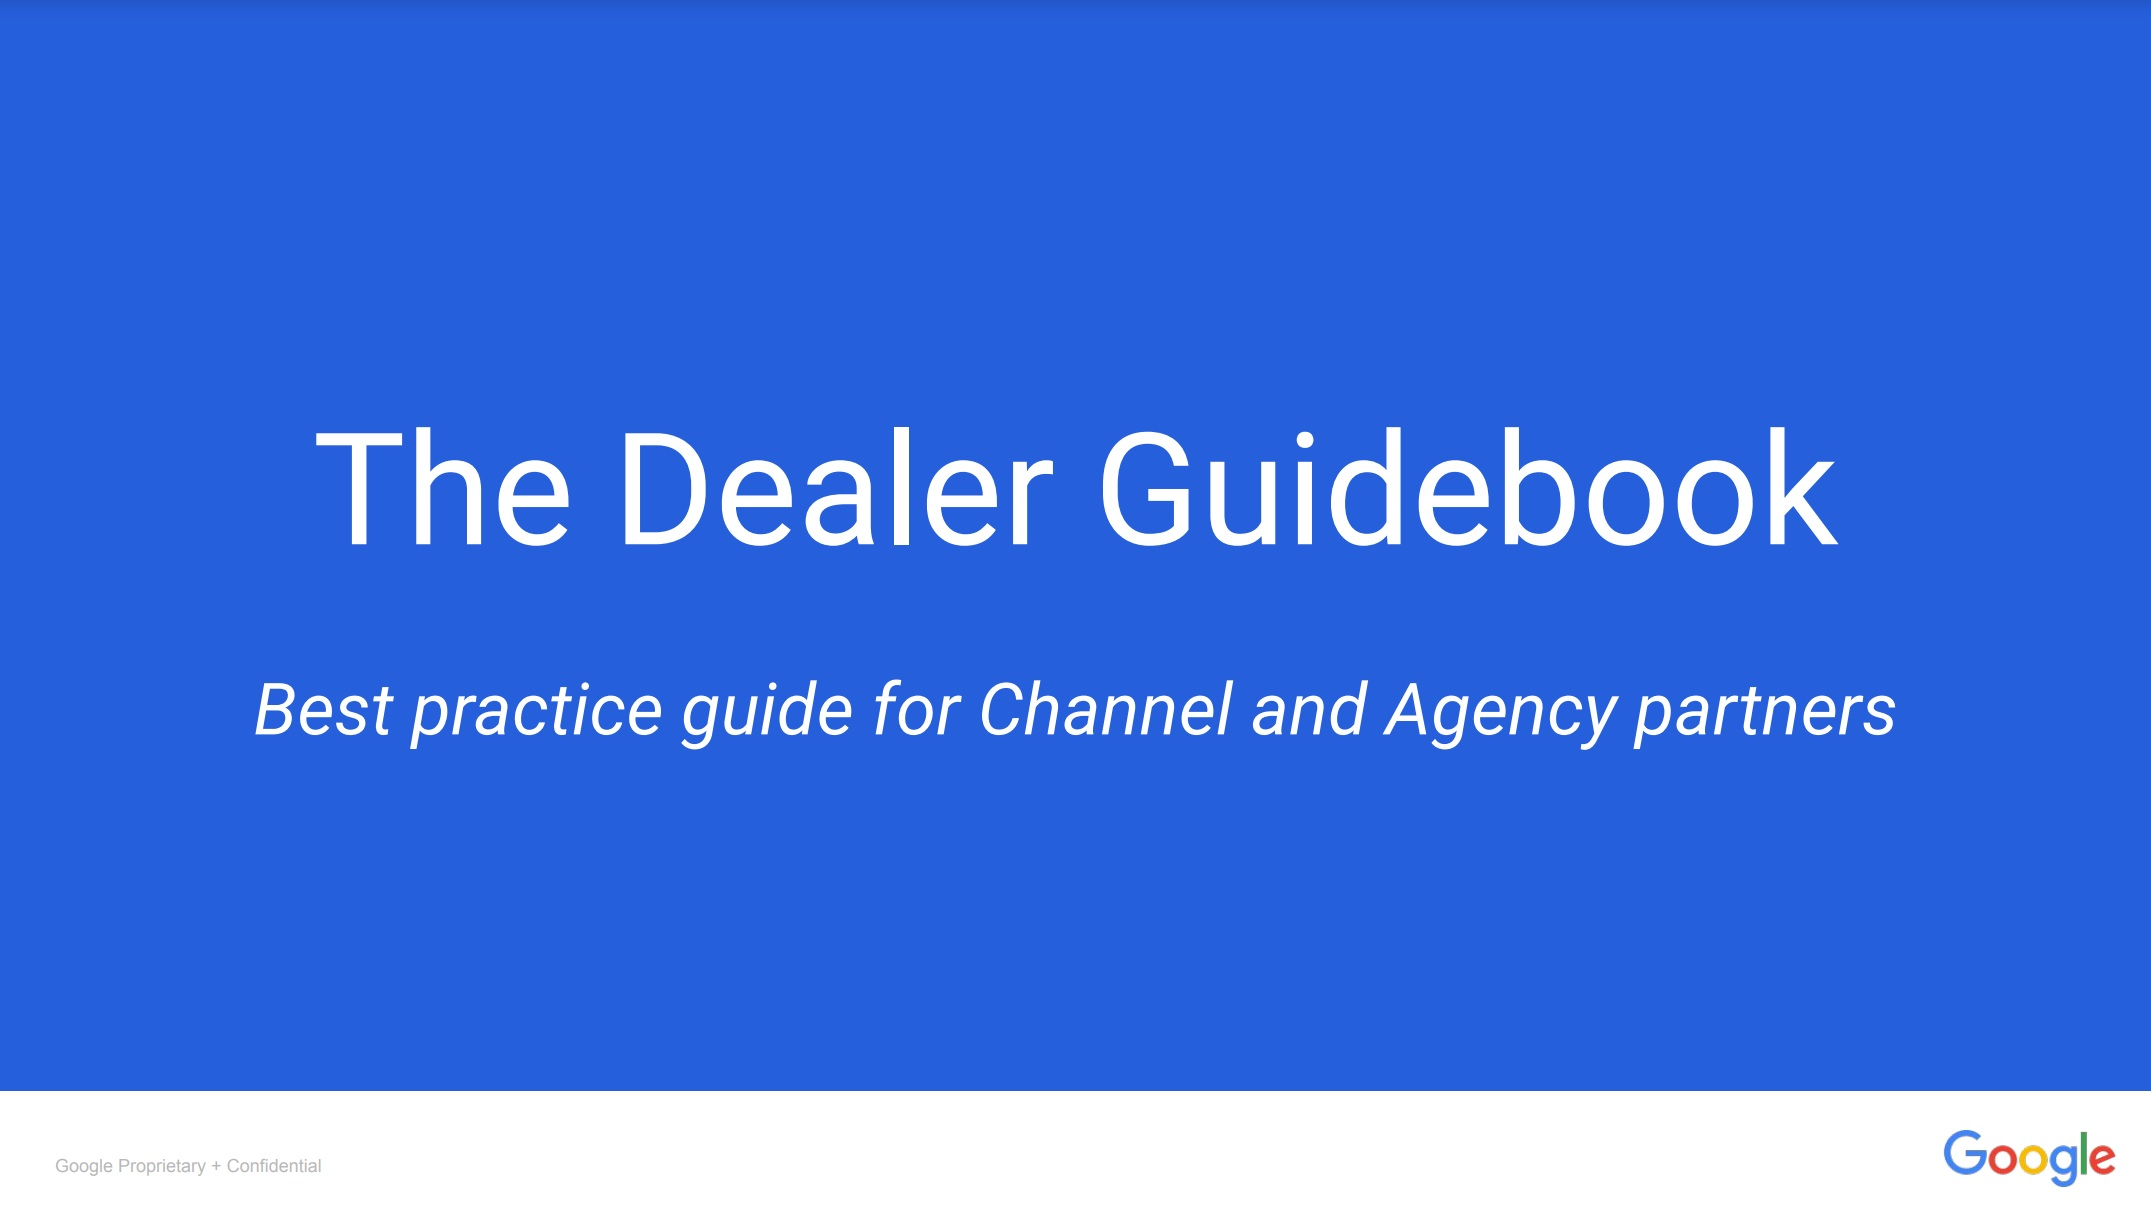 Google's The Dealer Guidebook